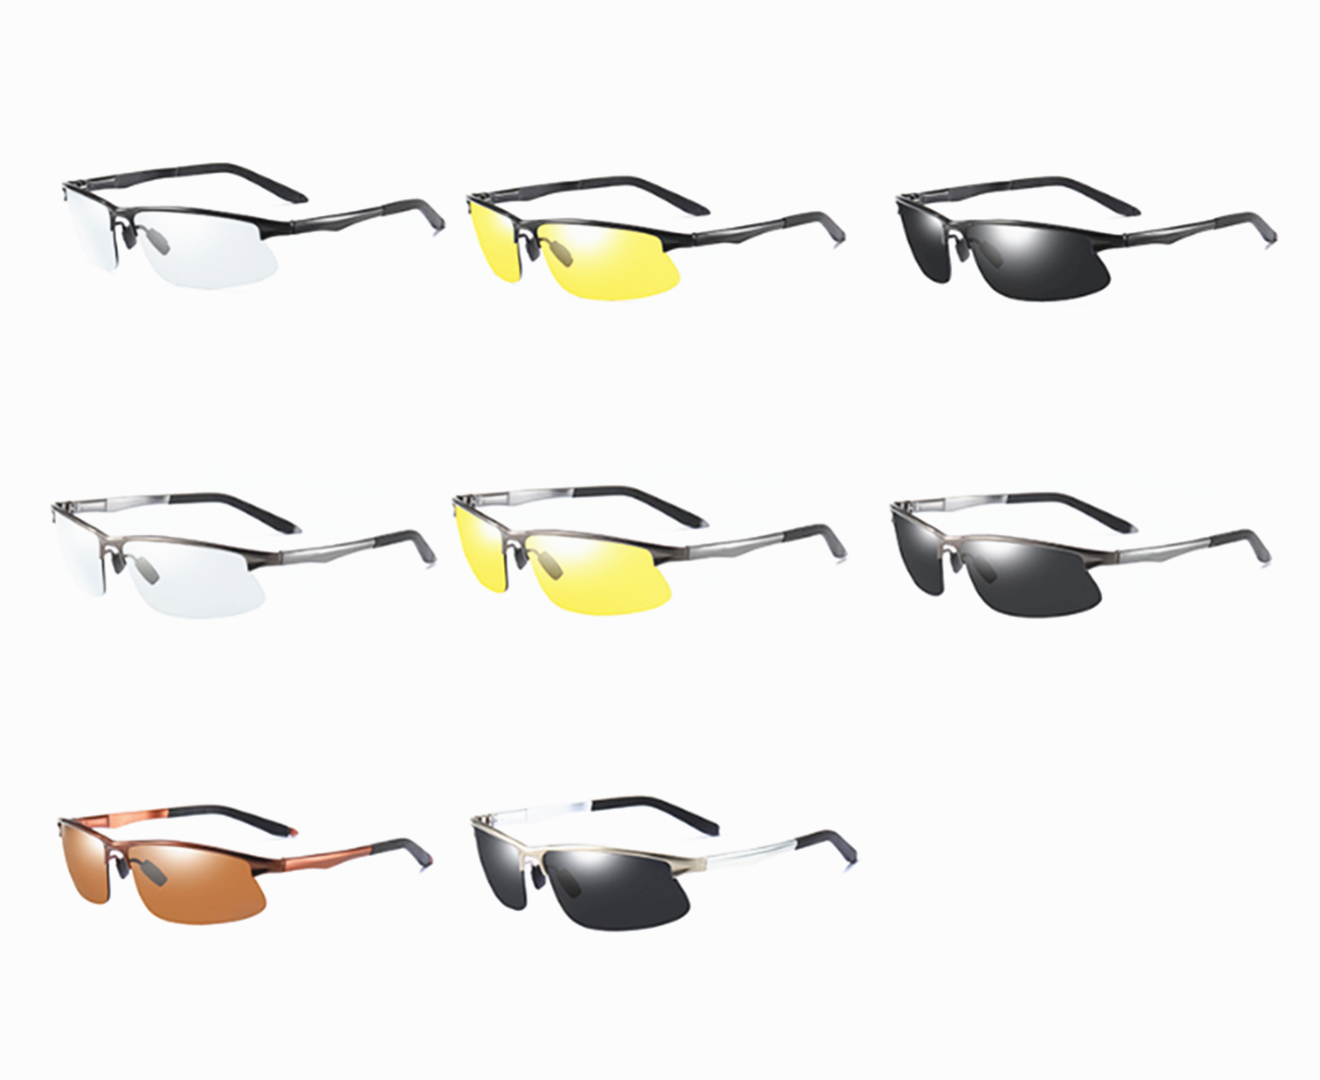 Fishing Glasses for Men Polarized Sunglasses Men UV400 Protection,Sports Driving Cycling Running Sunglasses Al-Mg Frame 